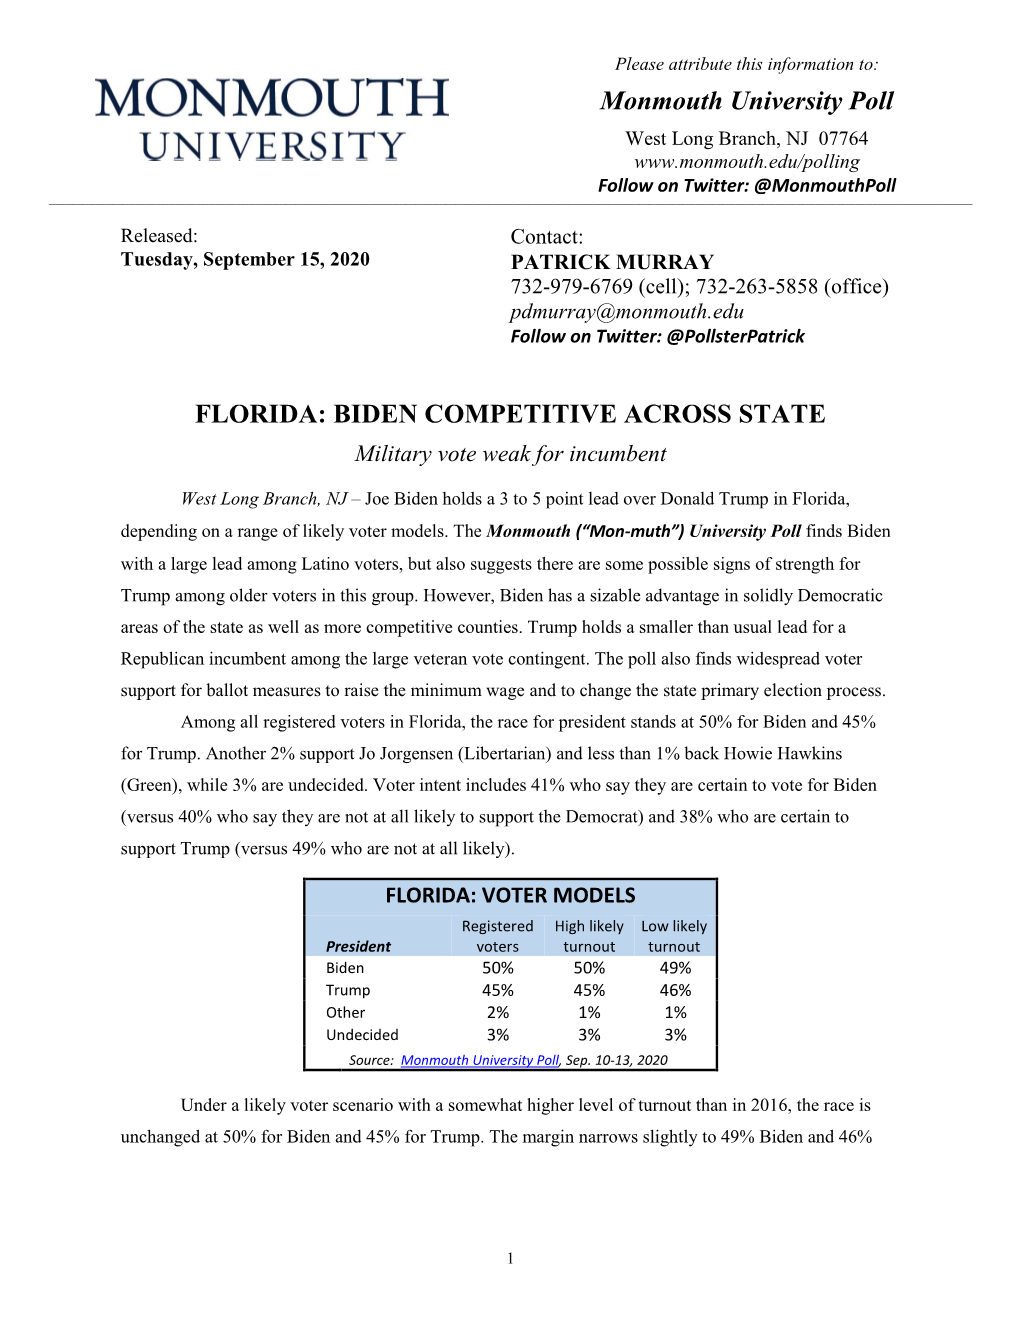 Monmouth University Poll FLORIDA: BIDEN COMPETITIVE ACROSS